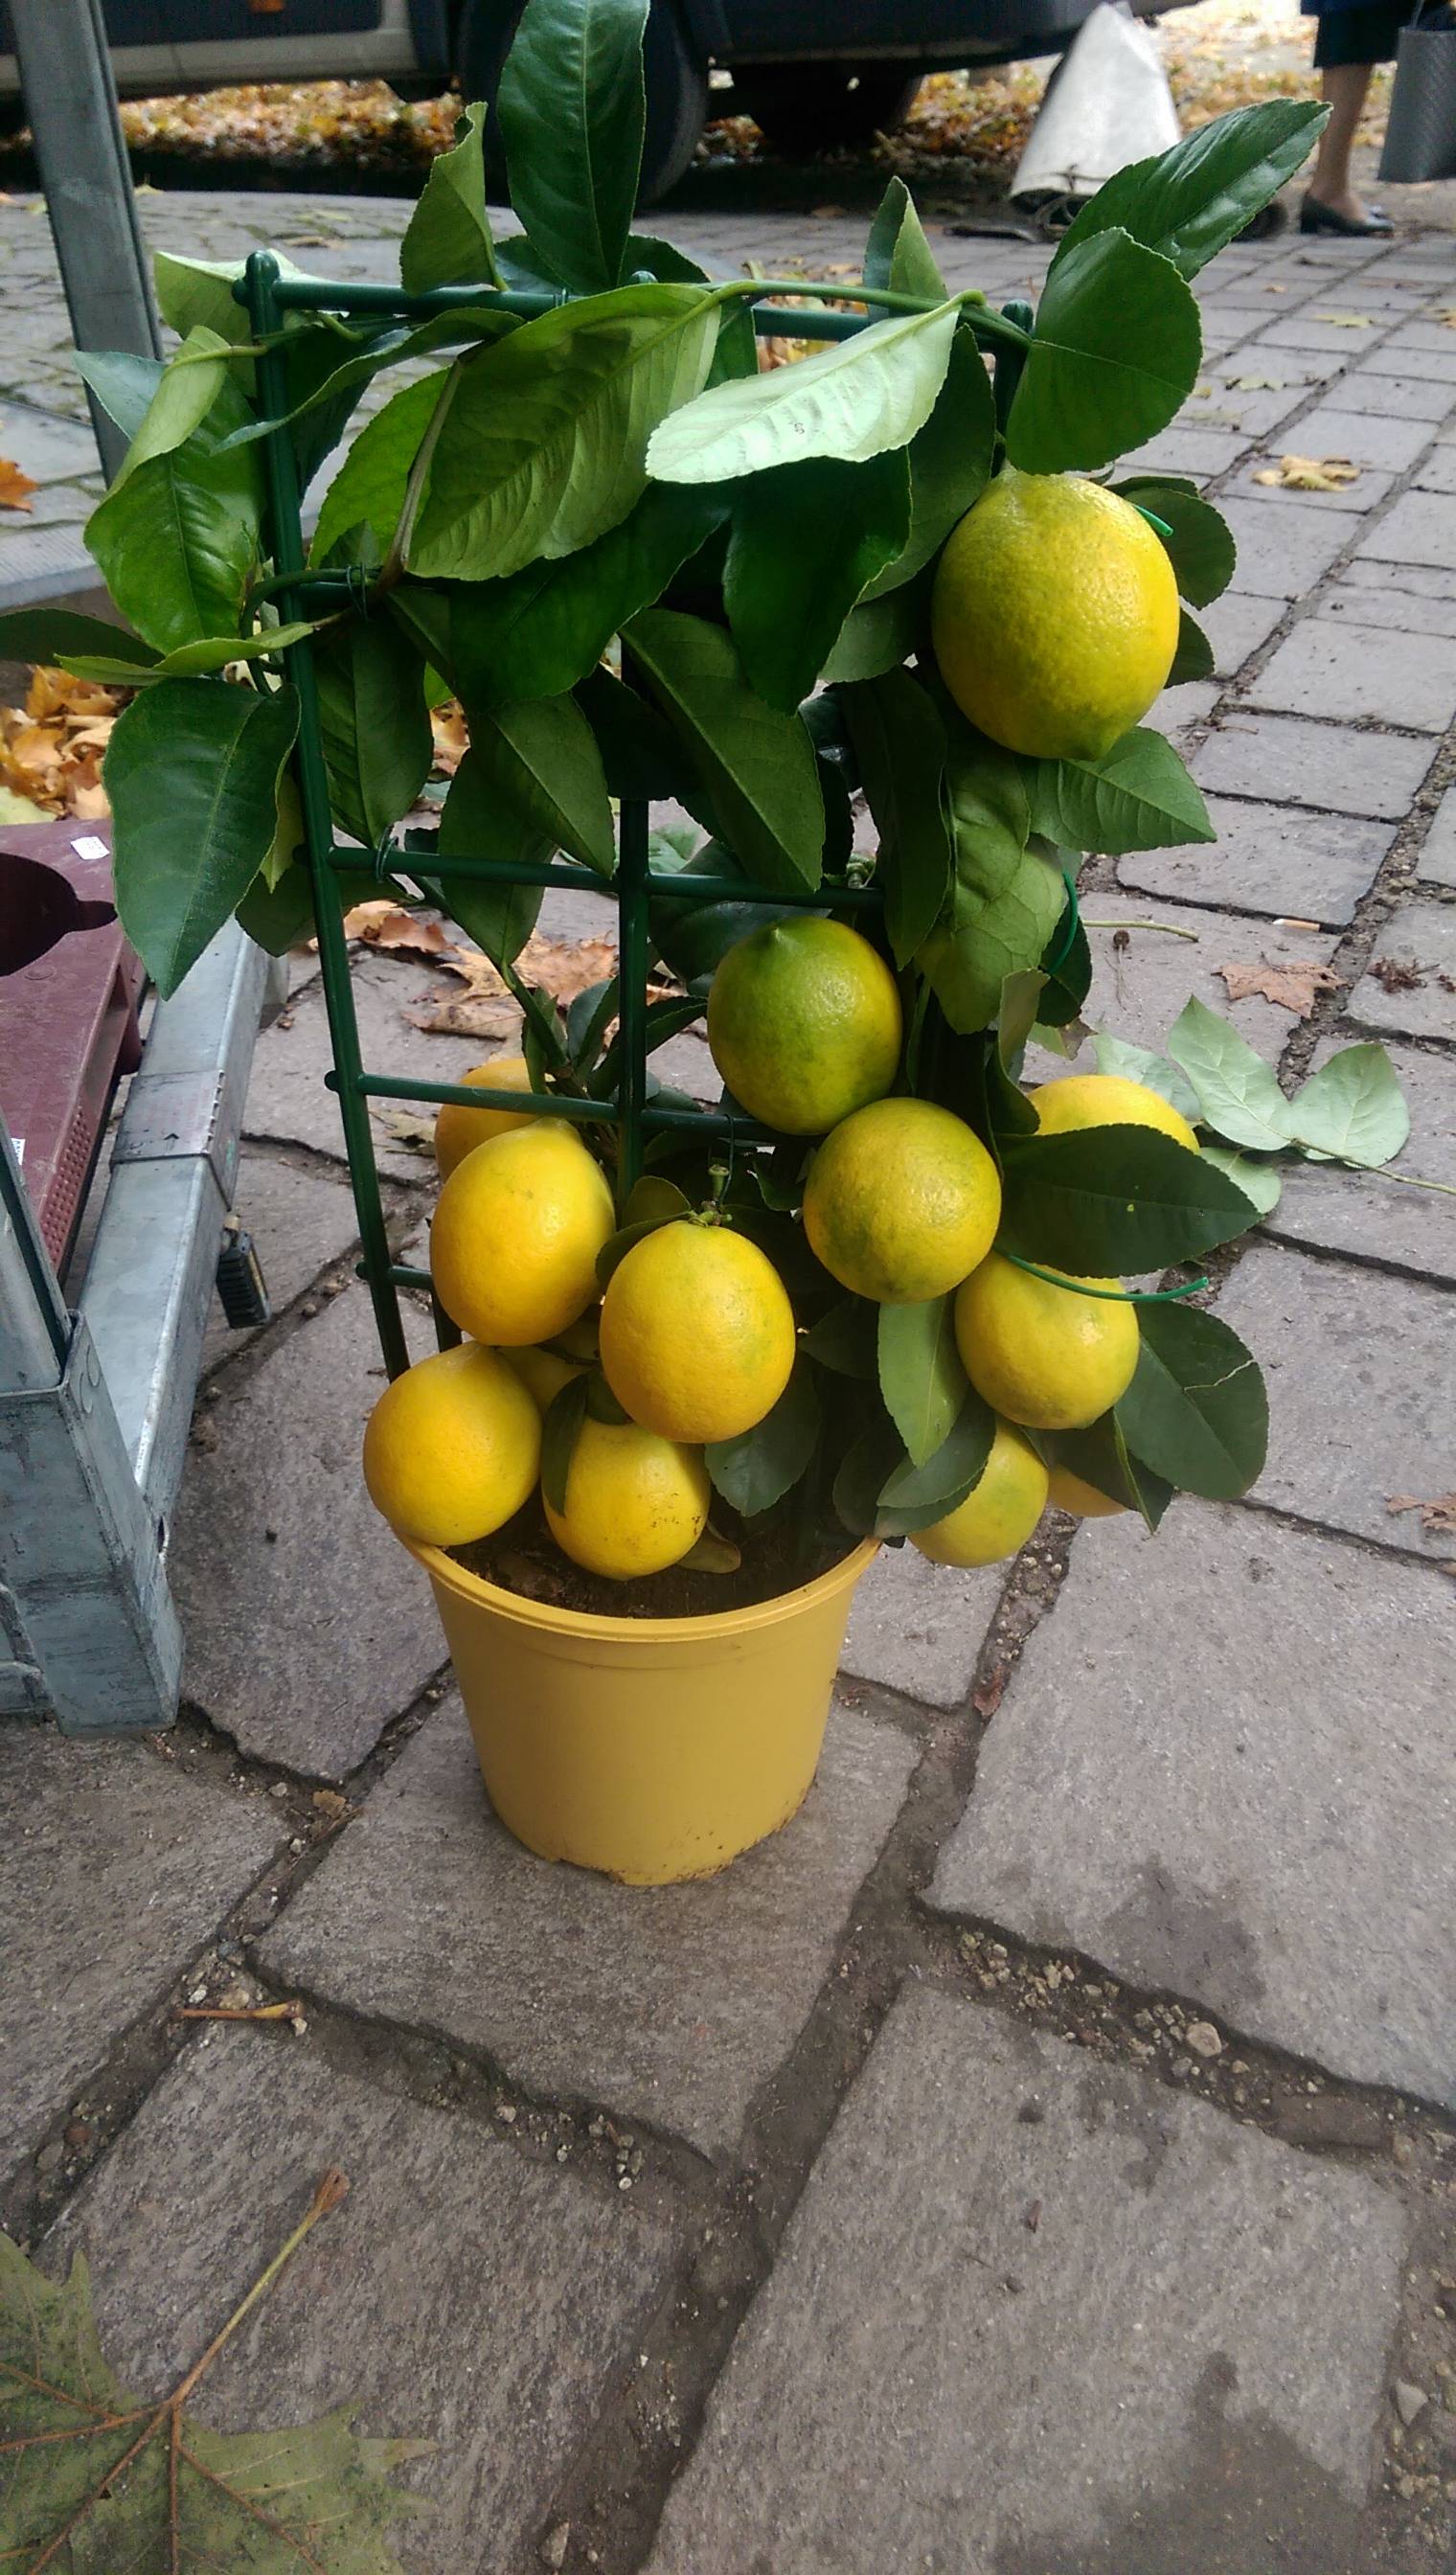 This little lemon tree has more lemon than tree.